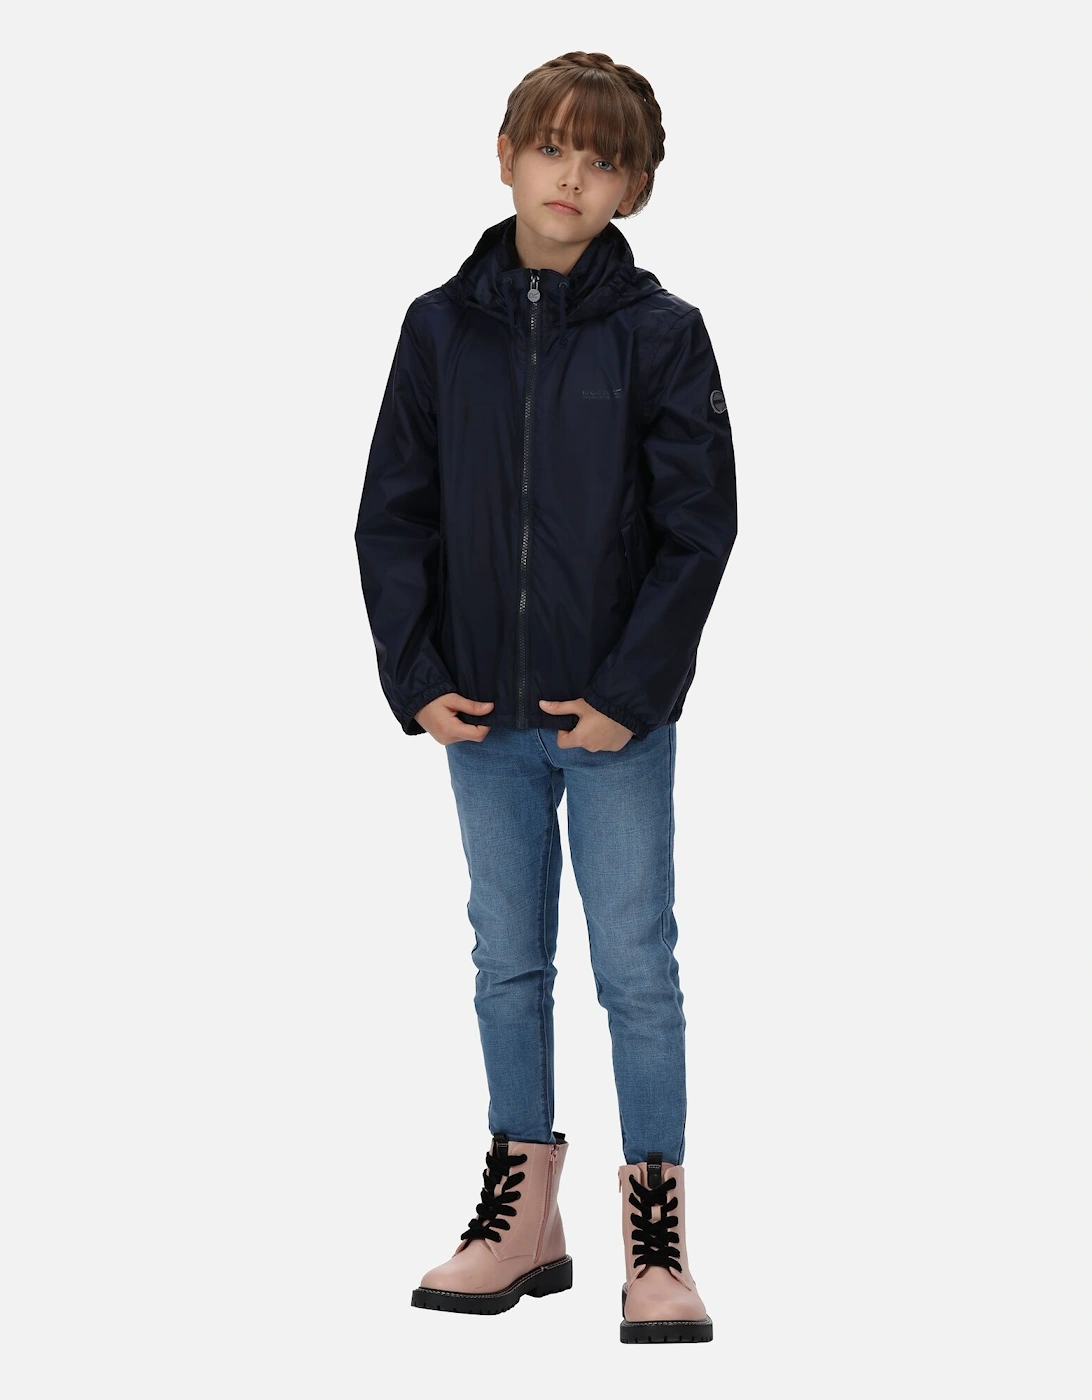 Childrens/Kids Catkin Waterproof Jacket